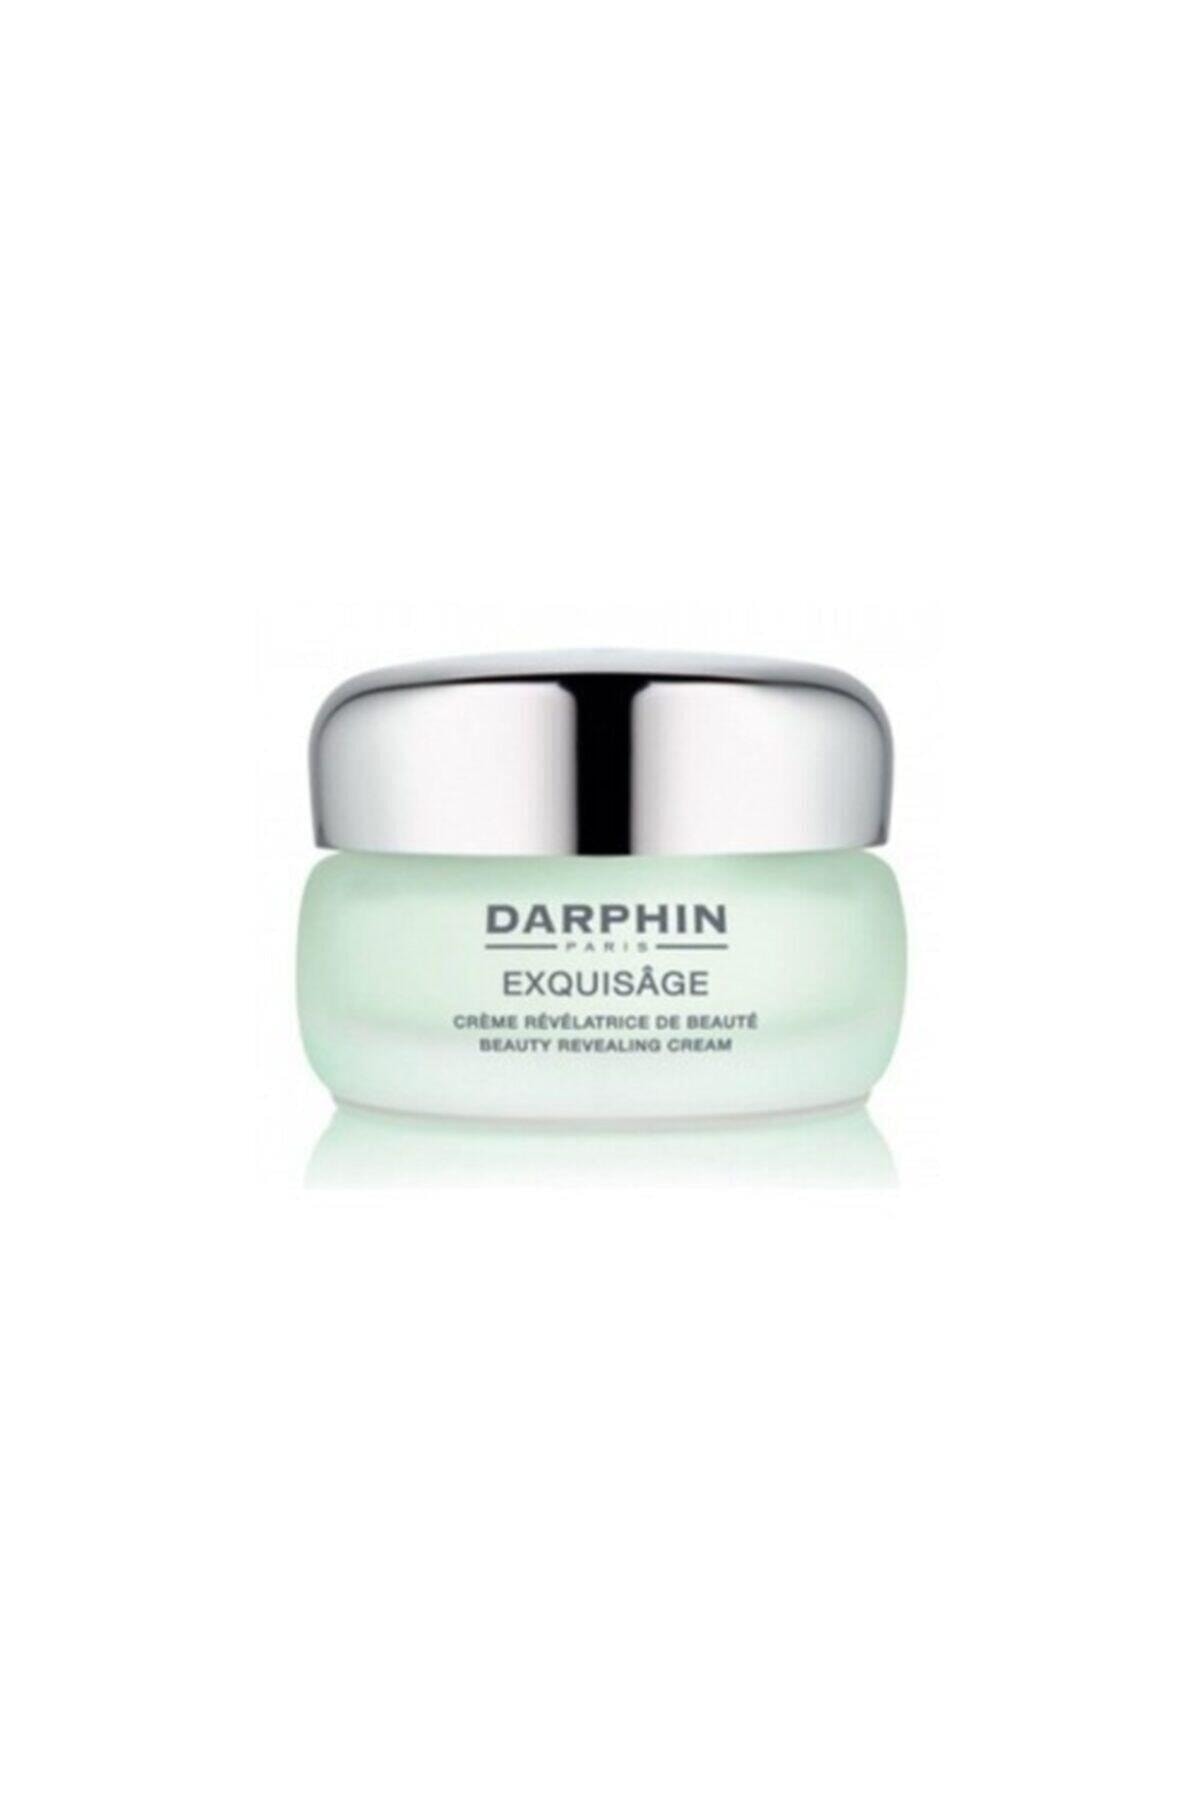 Darphin Elastikiyet Artıran Krem- Exquisage Beauty Revaling Cream 50 ml 882381073459